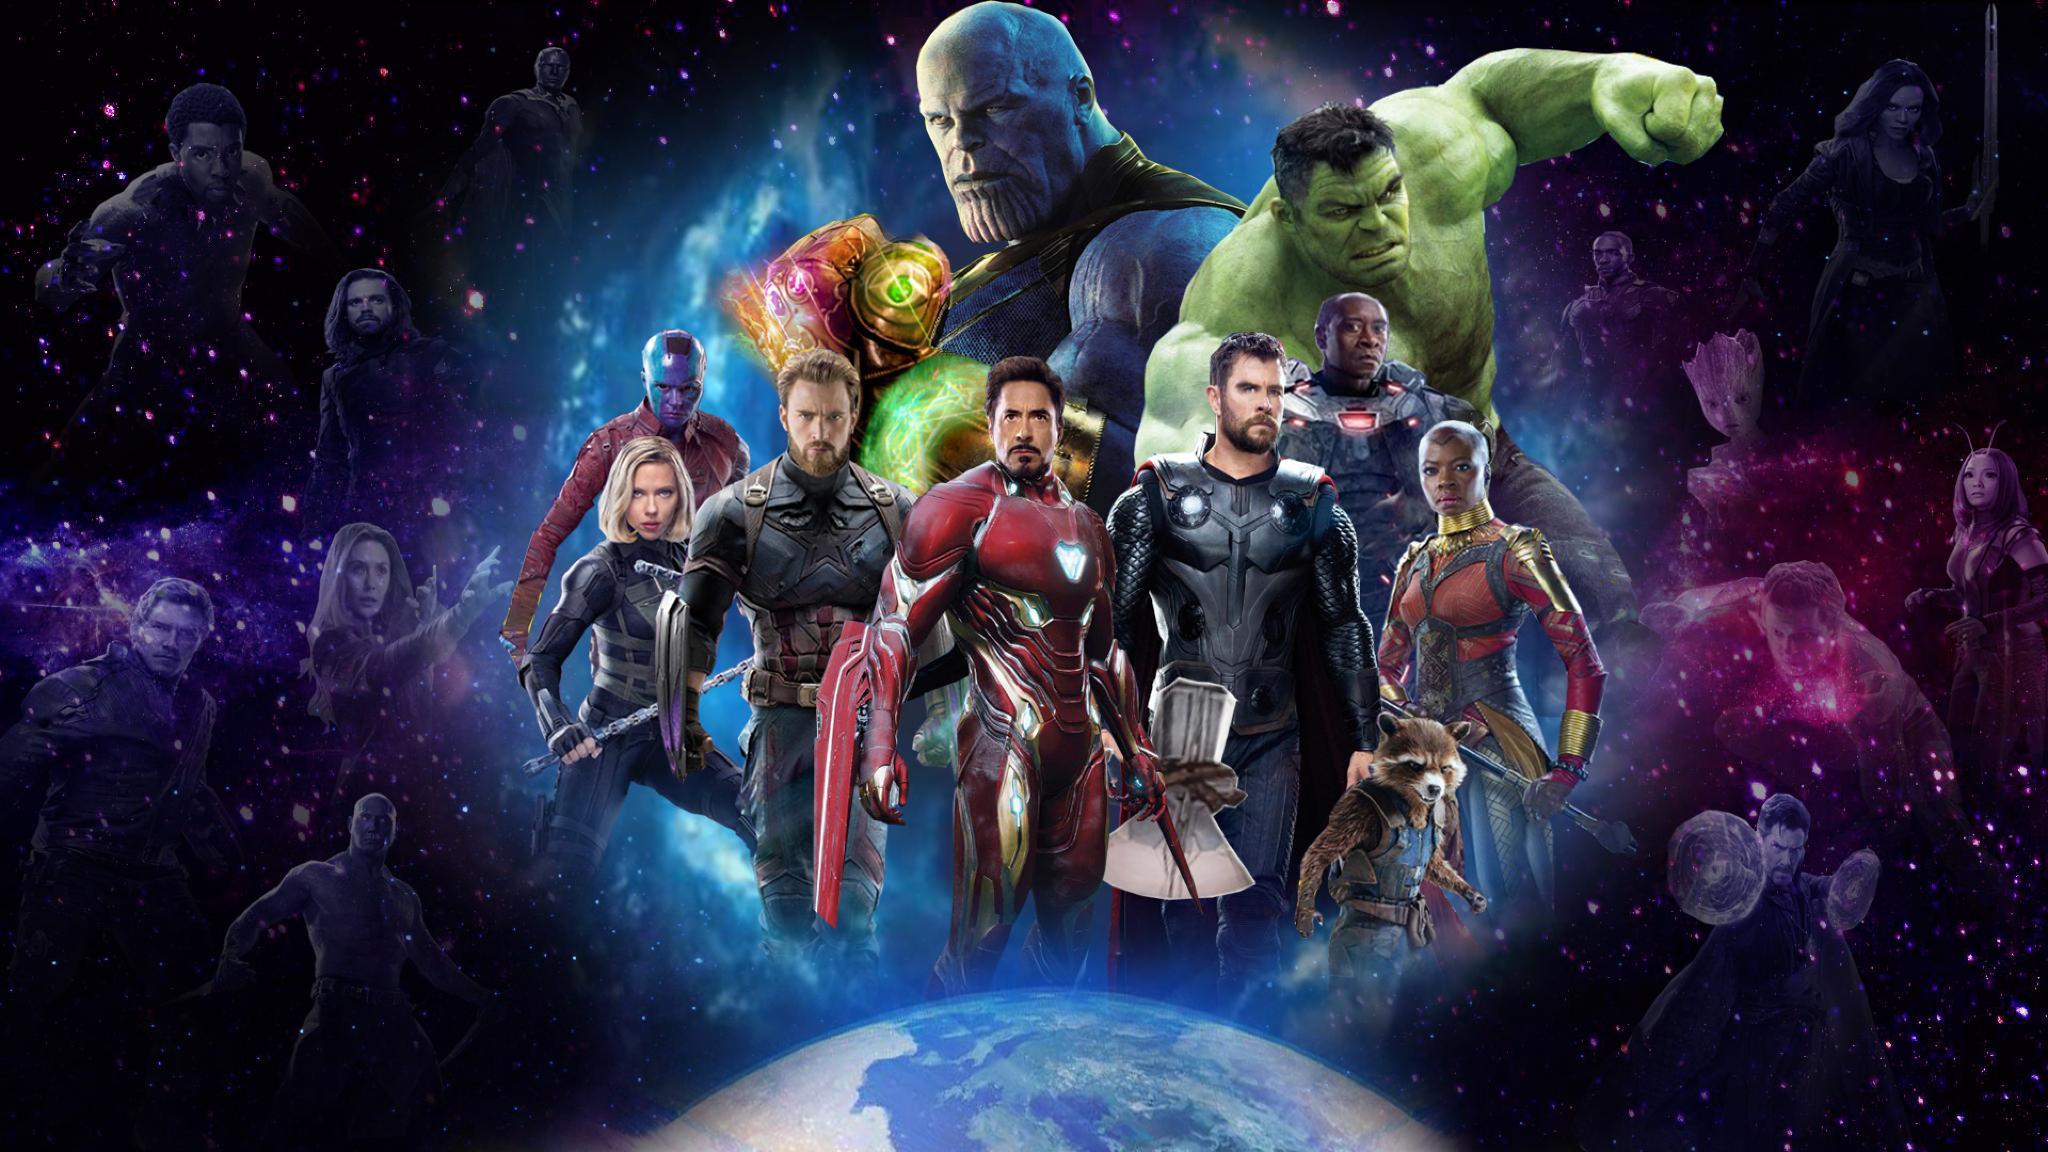 Avengers Endgame Superheroes Wallpapers HD 2019 para Android - APK